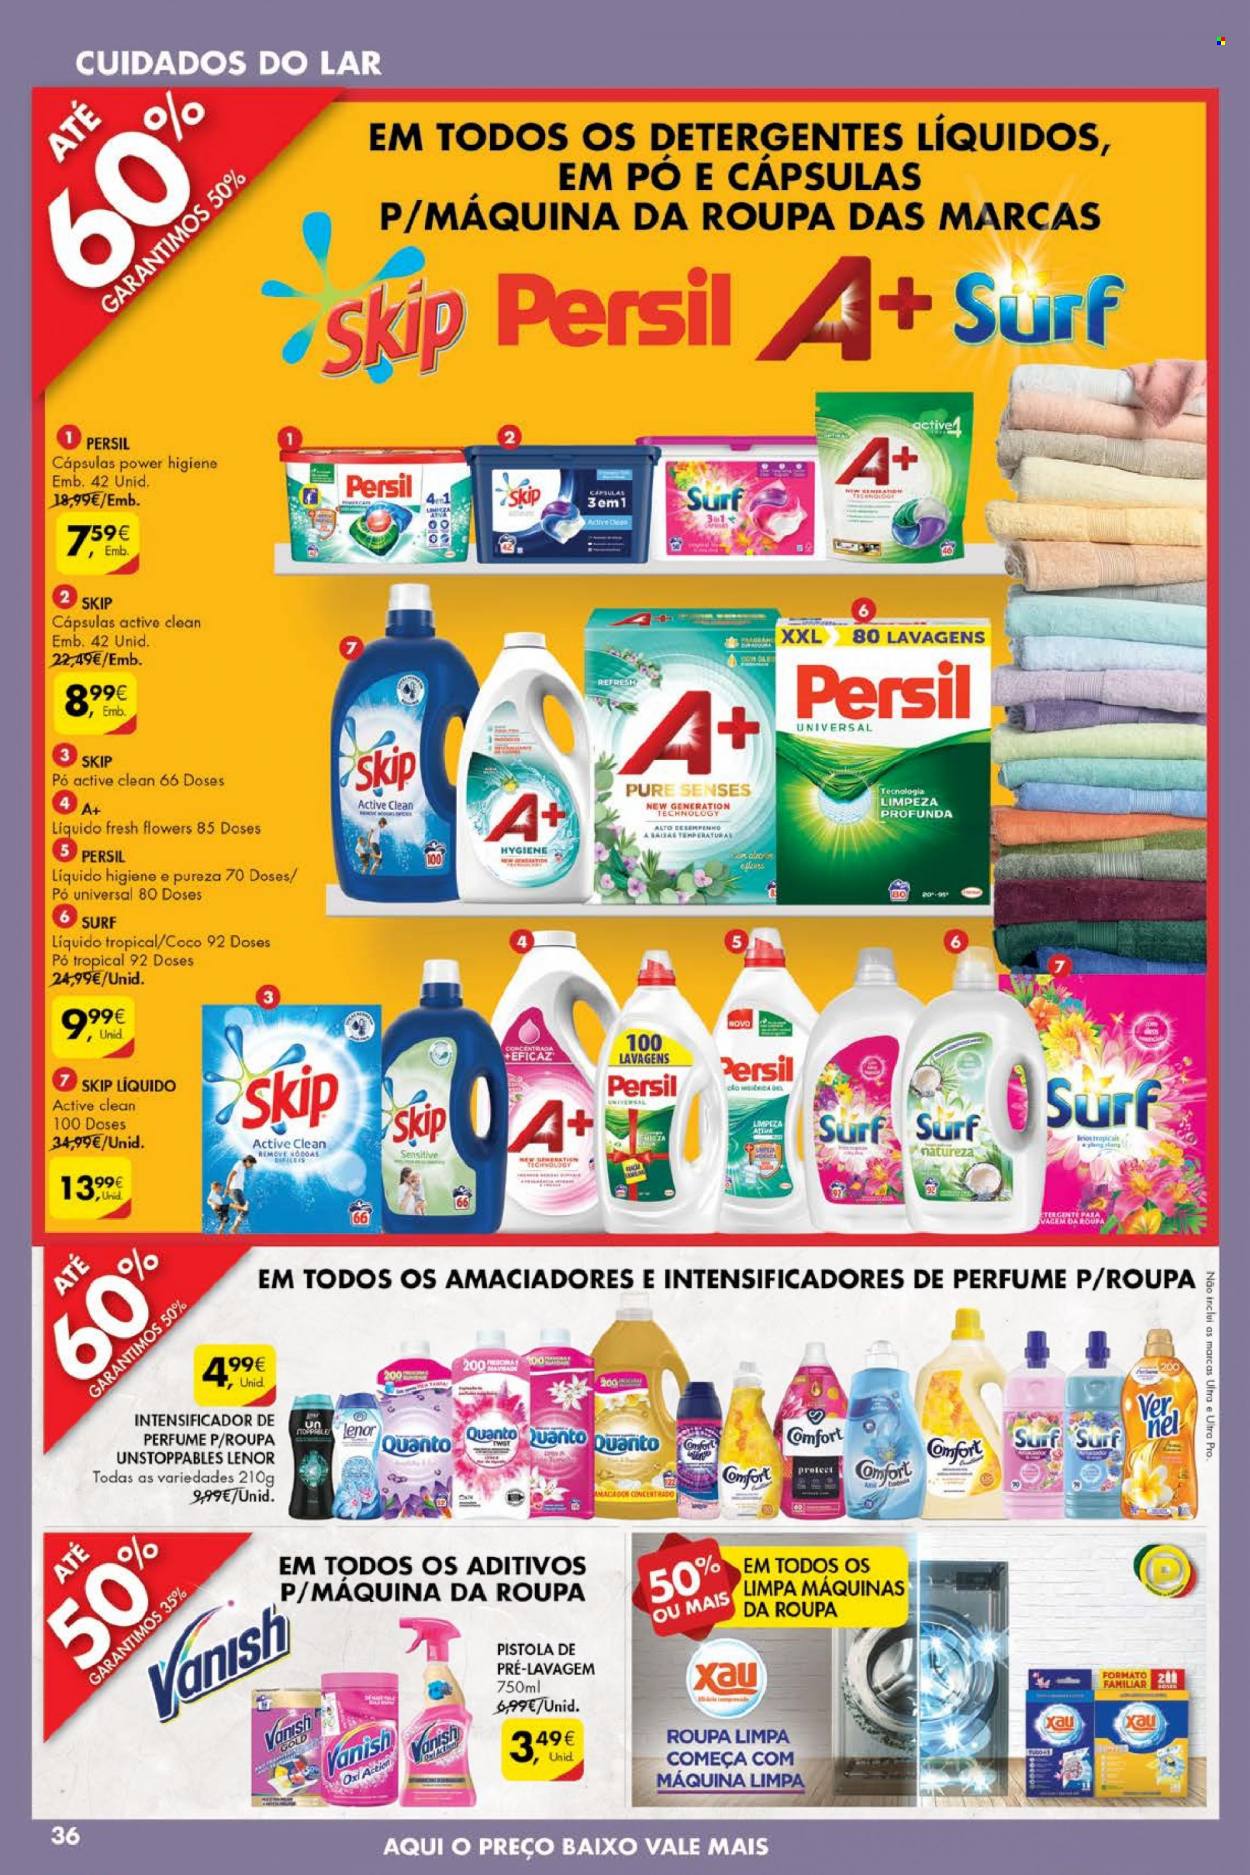 thumbnail - Folheto Pingo Doce - 25.1.2022 - 31.1.2022 - Produtos em promoção - Persil, detergente, Vanish, Lenor, Surf, Xau, Comfort, Skip, perfume, pistola. Página 38.